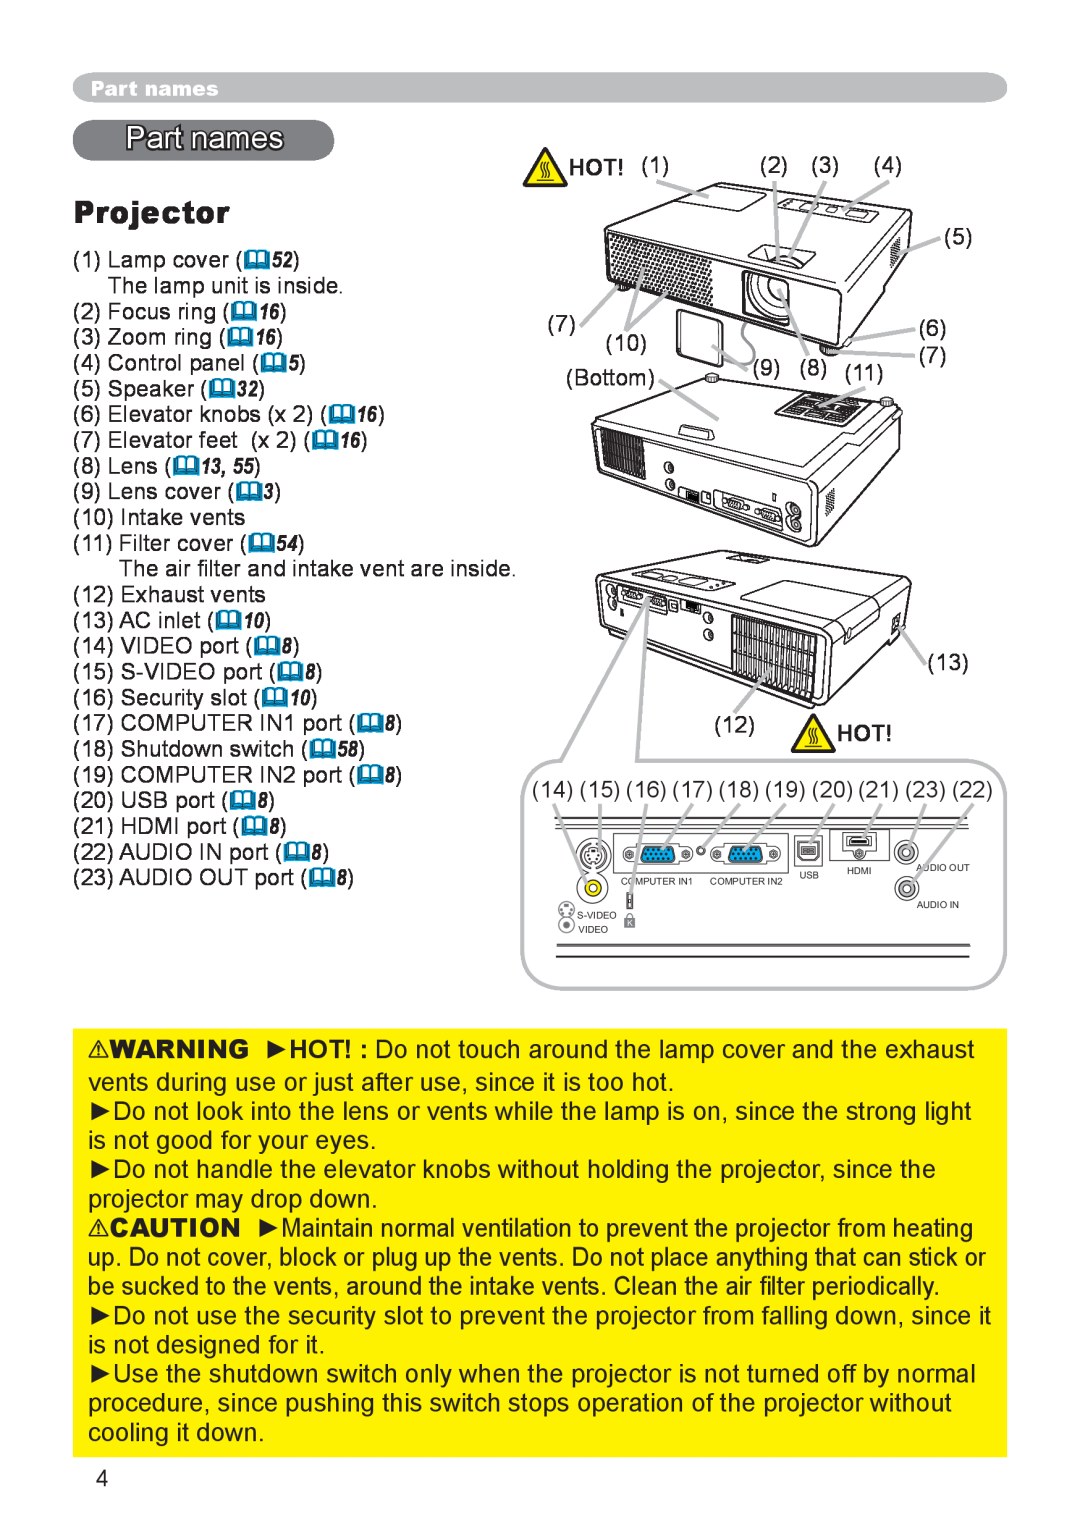 Dukane 8783 user manual Part names, Projector 